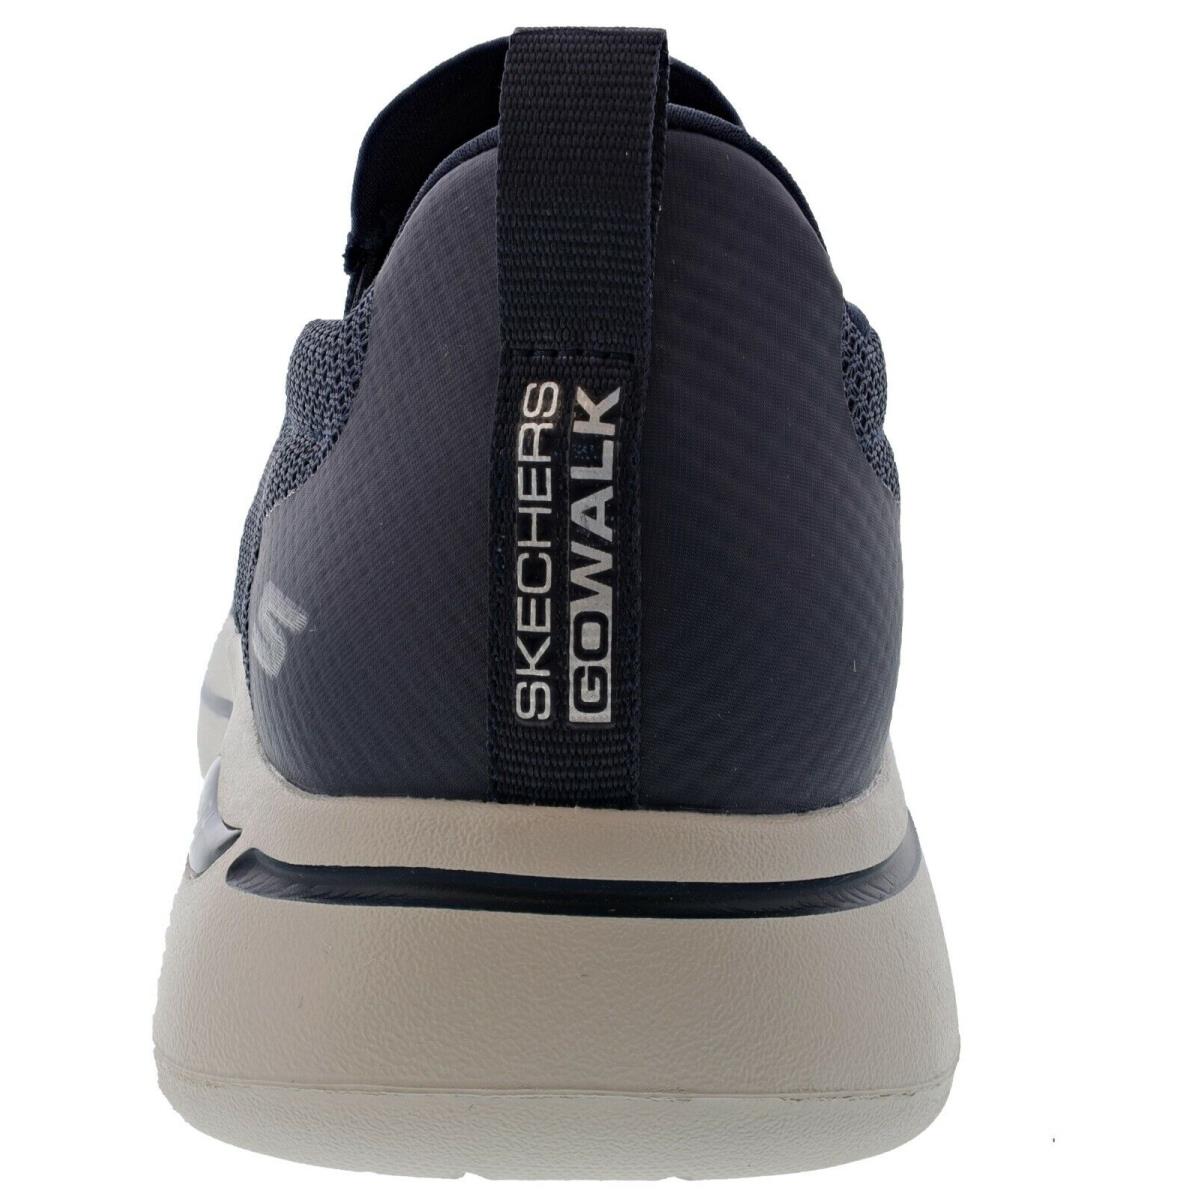 Skechers shoes WALK ARCH - NAVY / GREY 2